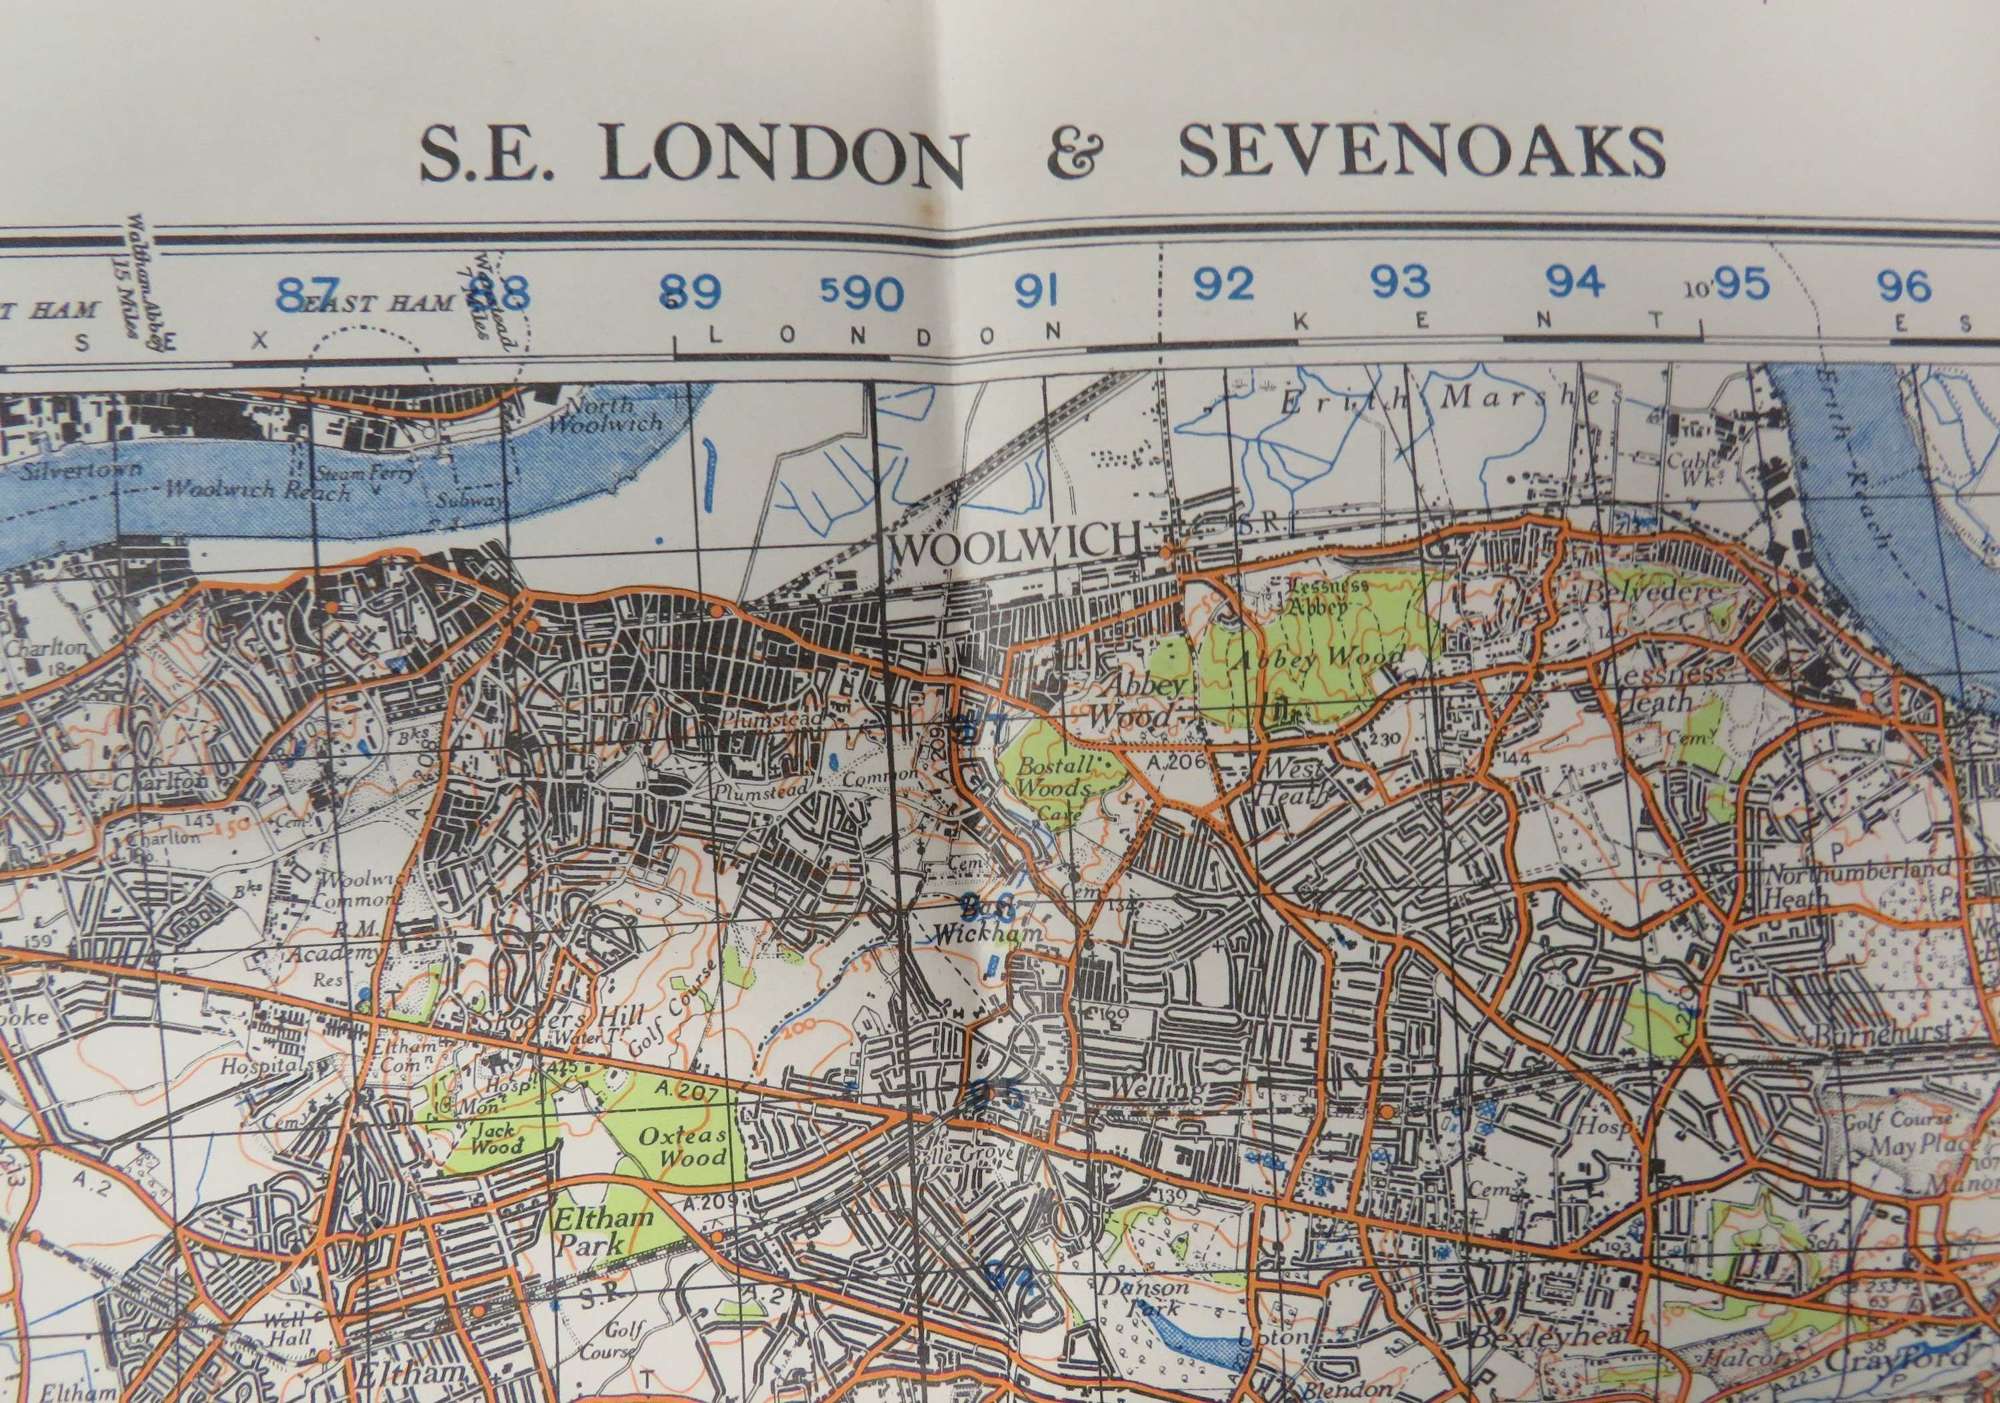 WW2 British Military Map of S.E London and Sevenoaks